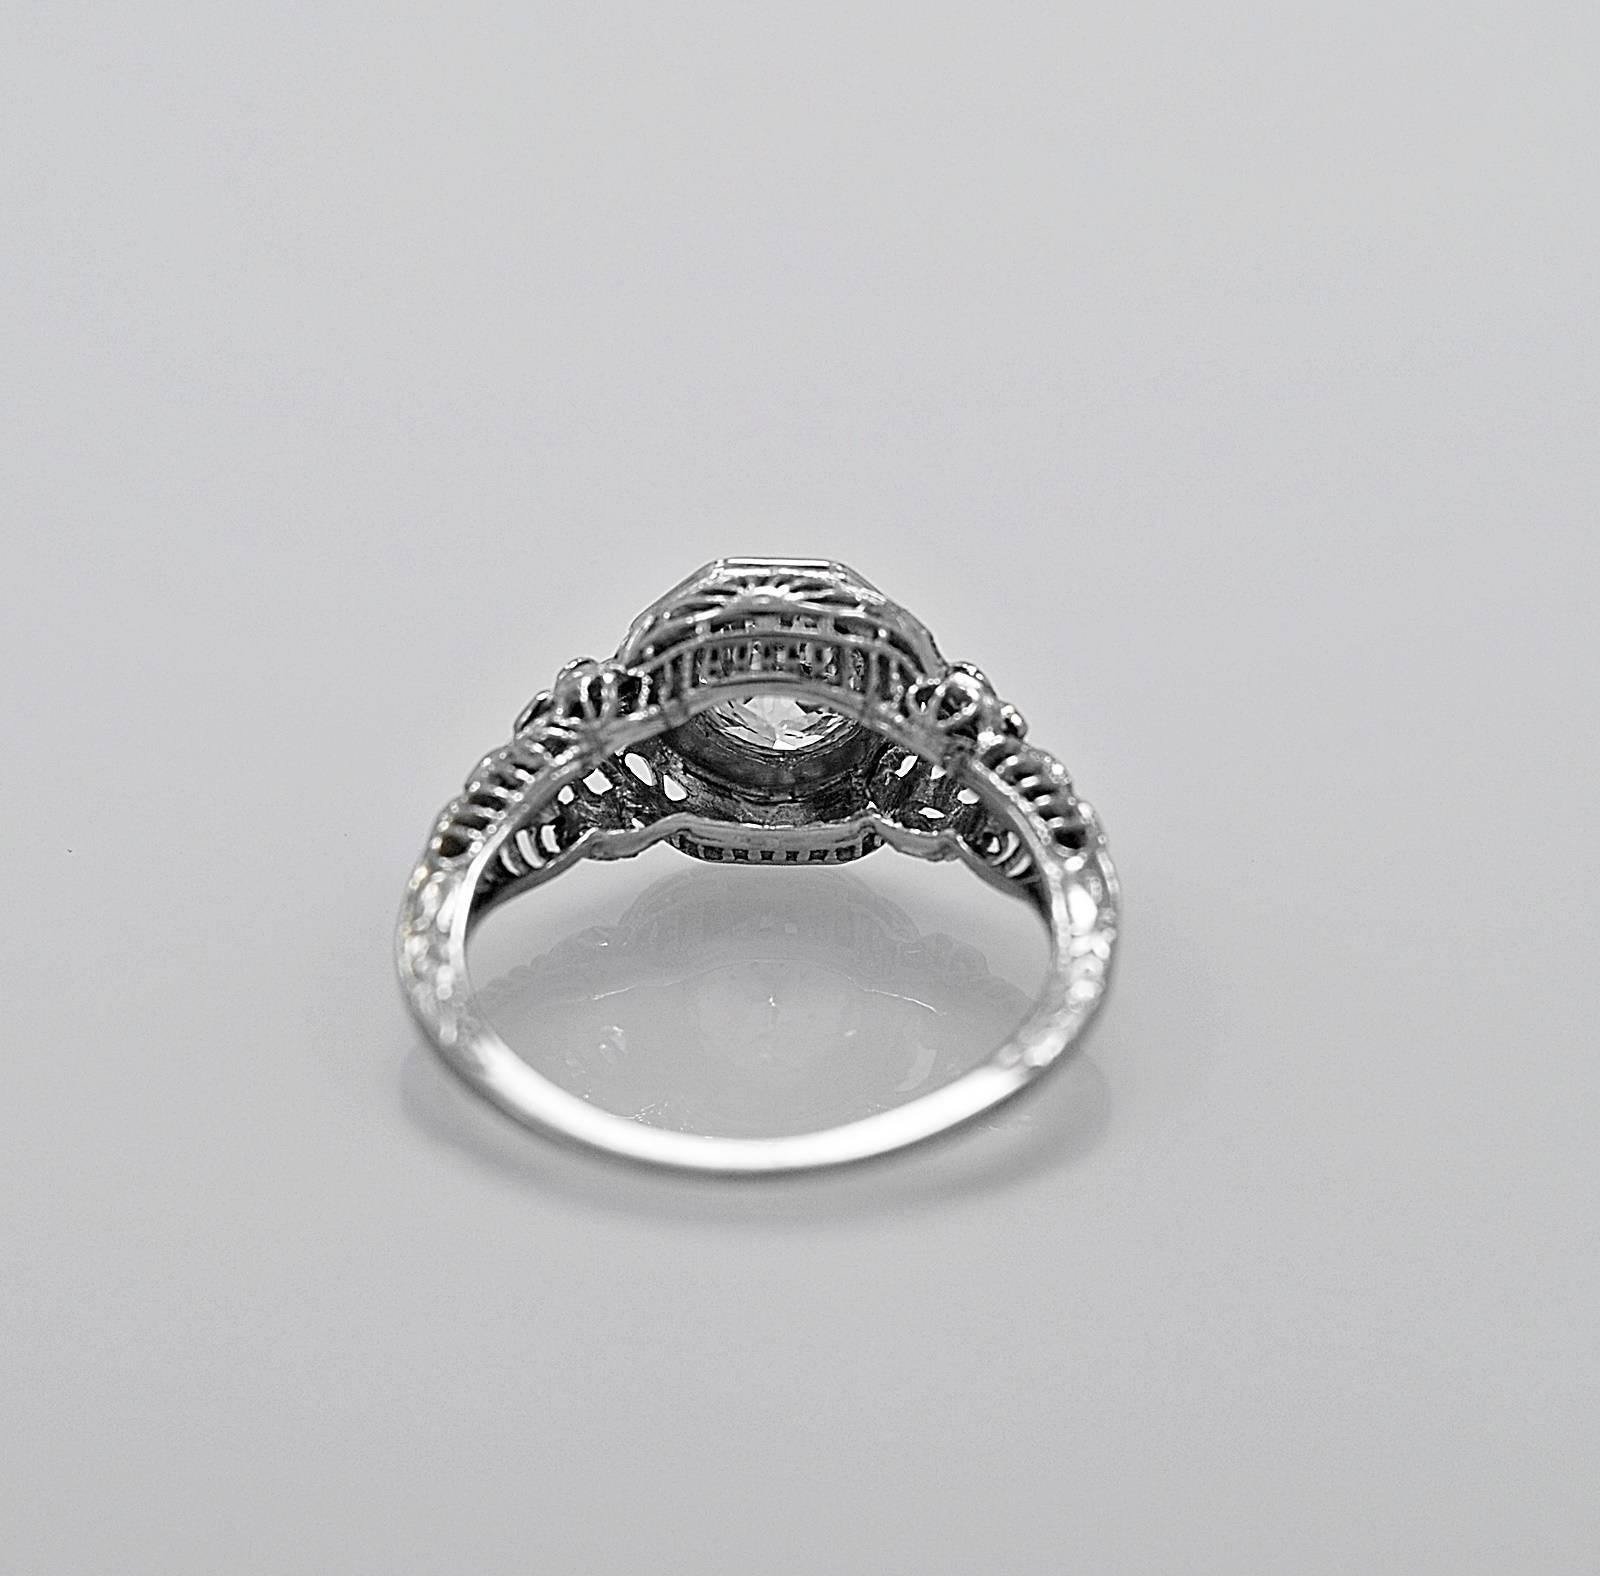 60 karat diamond ring